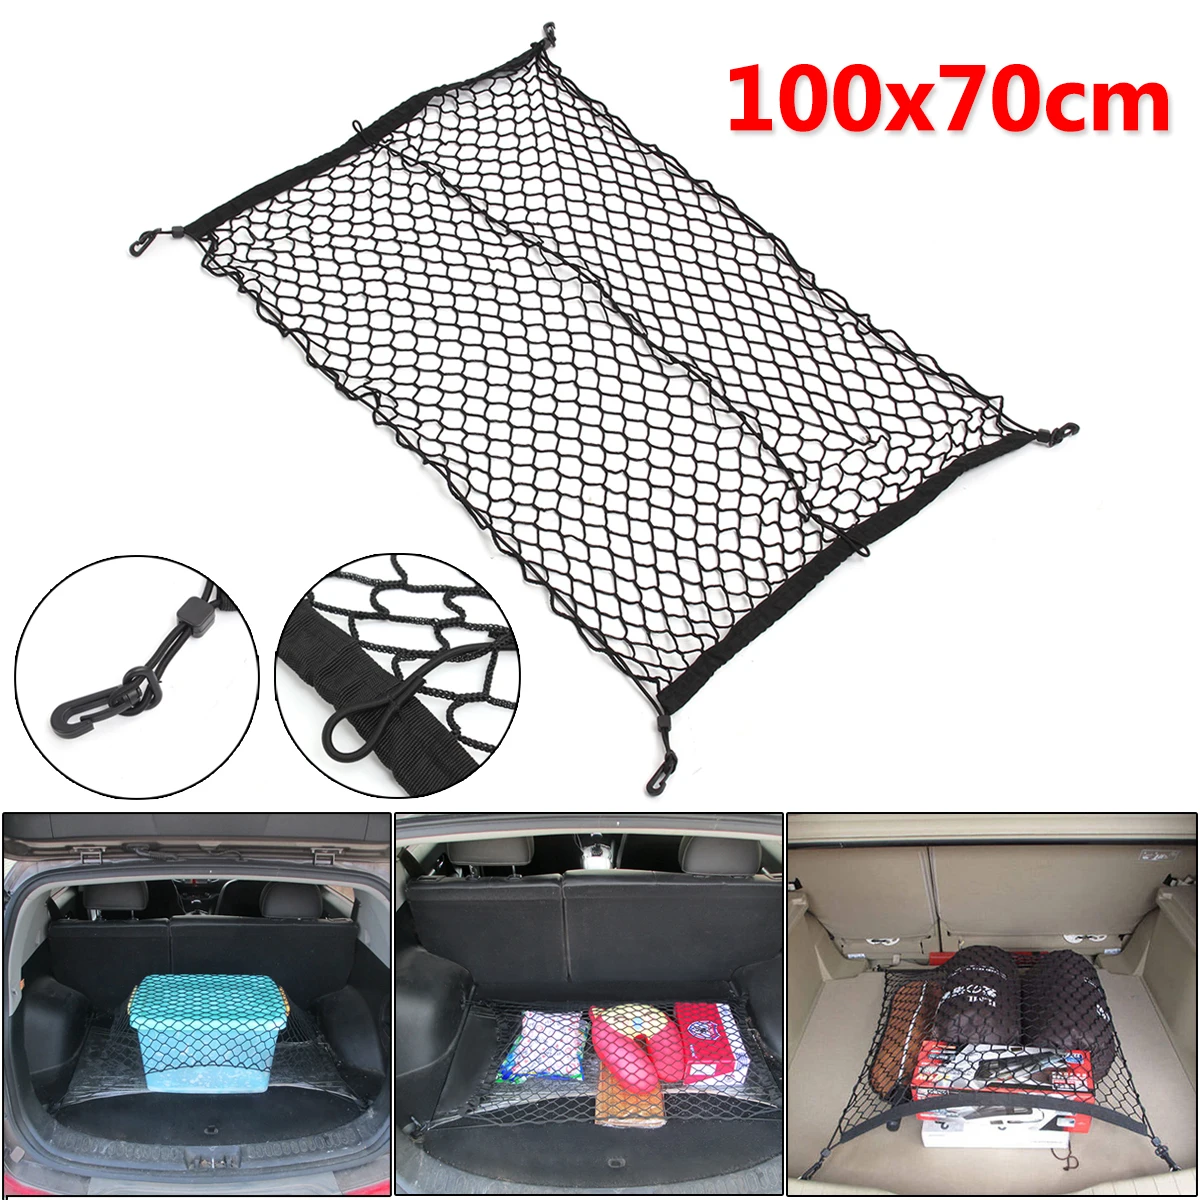 100 x 70cm Universal Black Nylon Car Trunk Net Luggage Storage Organizer Bag Rear Tail Mesh Network With 4 Hooks cargo net